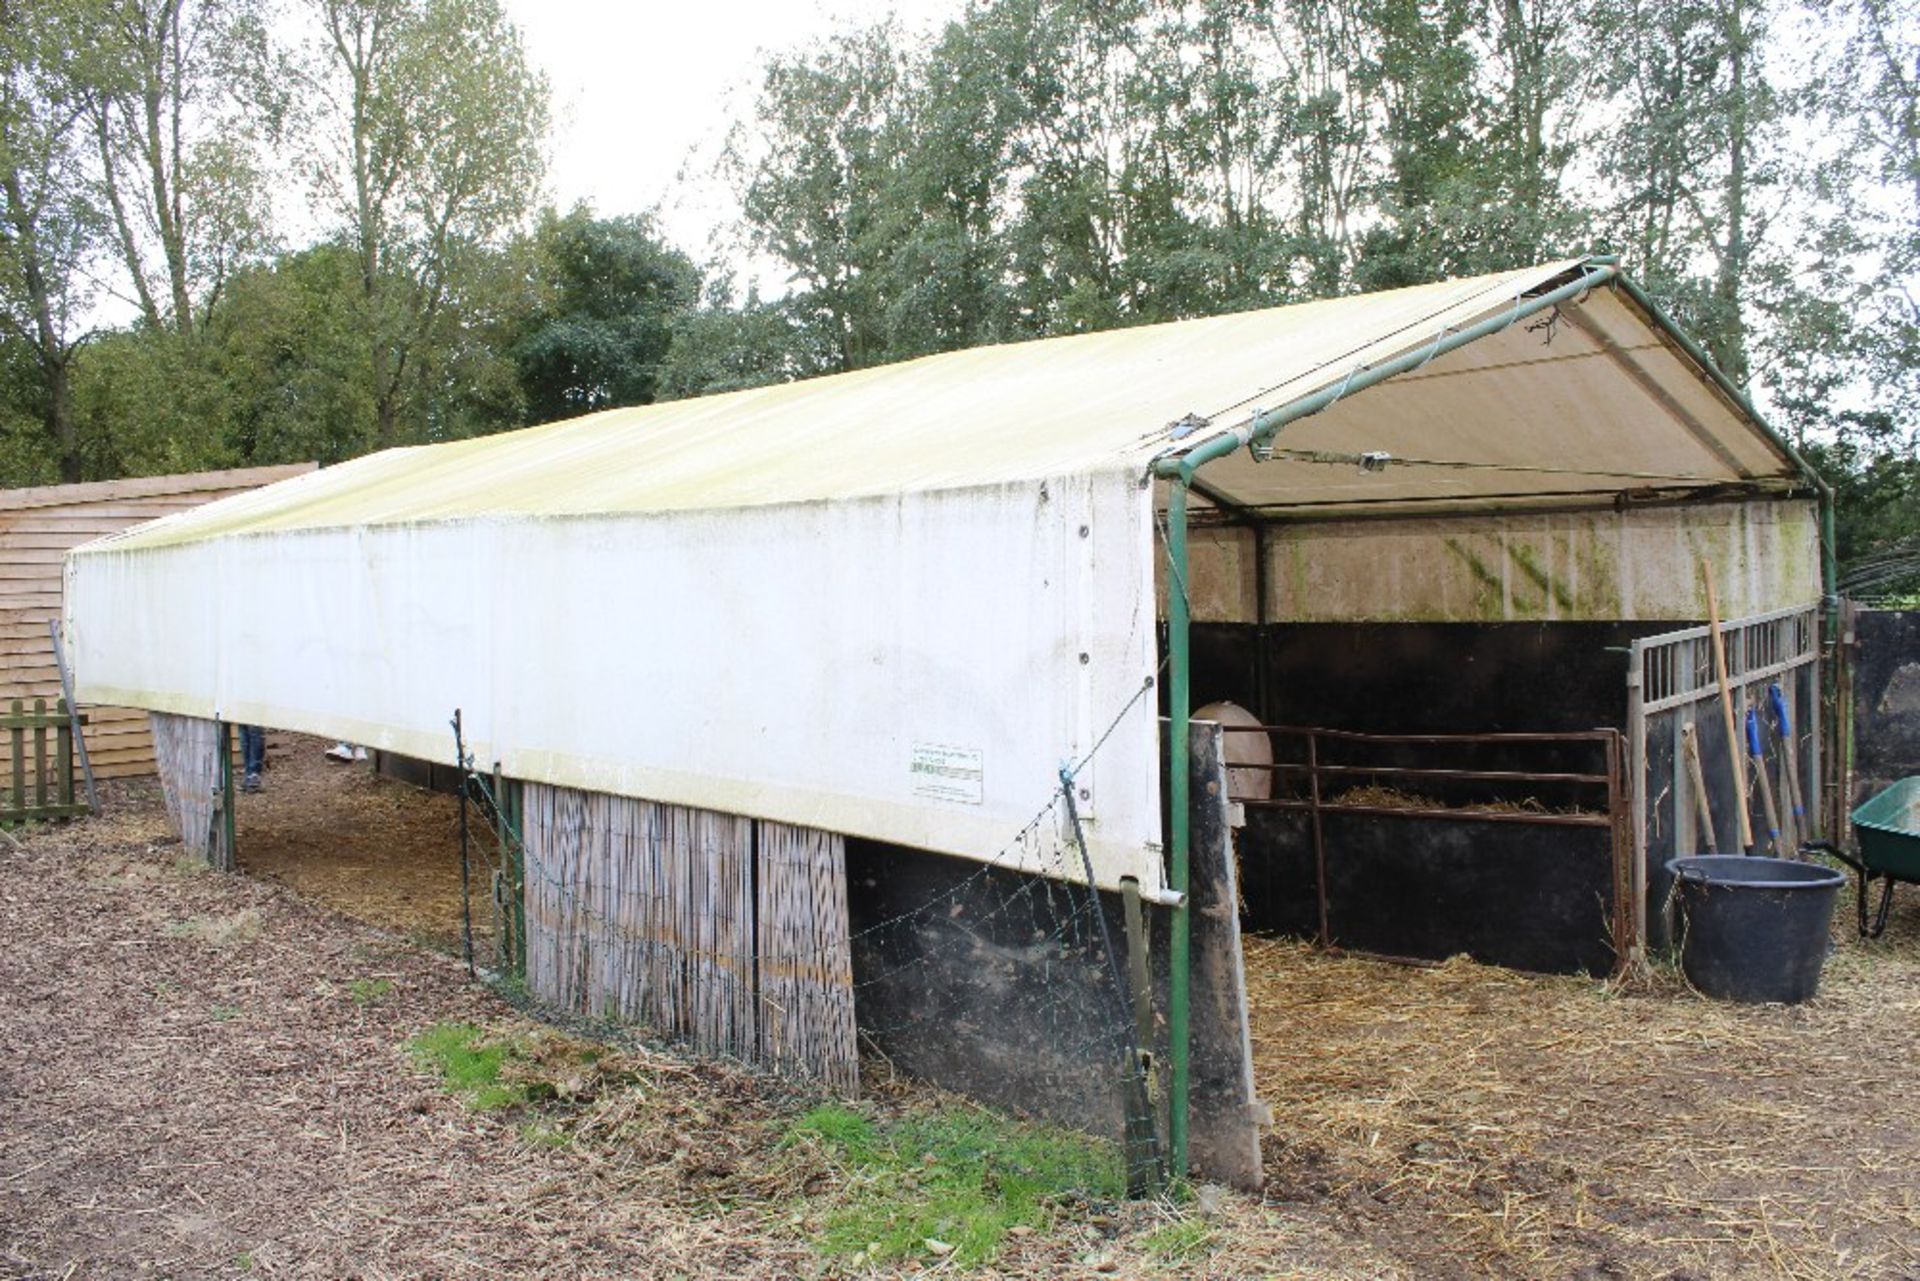 John Harvey Engineering 10m x 5m pig tent. 1.8m to